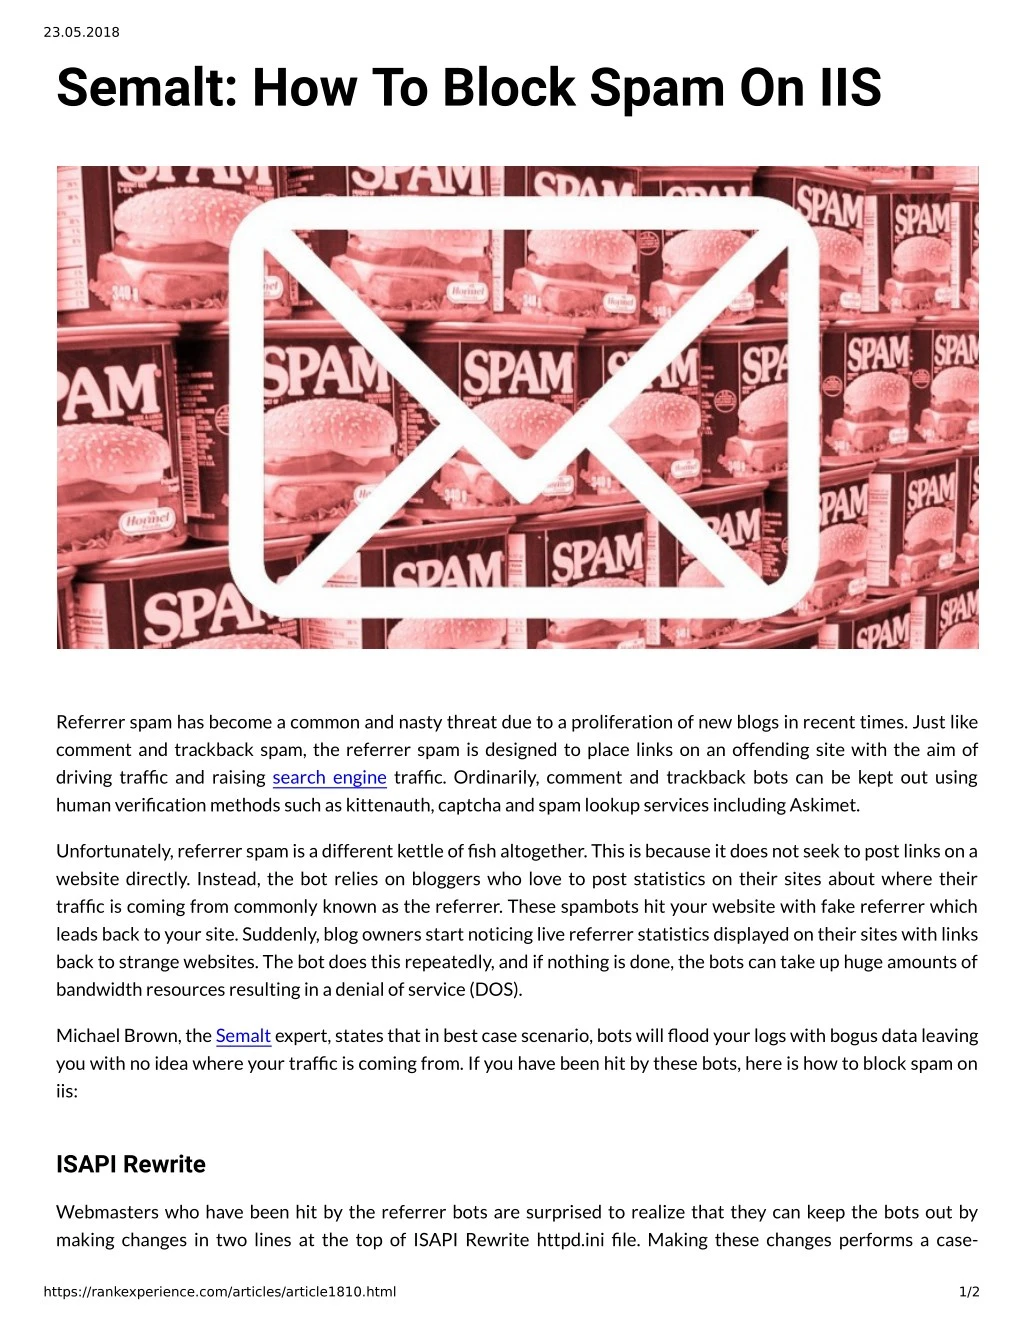 23 05 2018 semalt how to block spam on iis